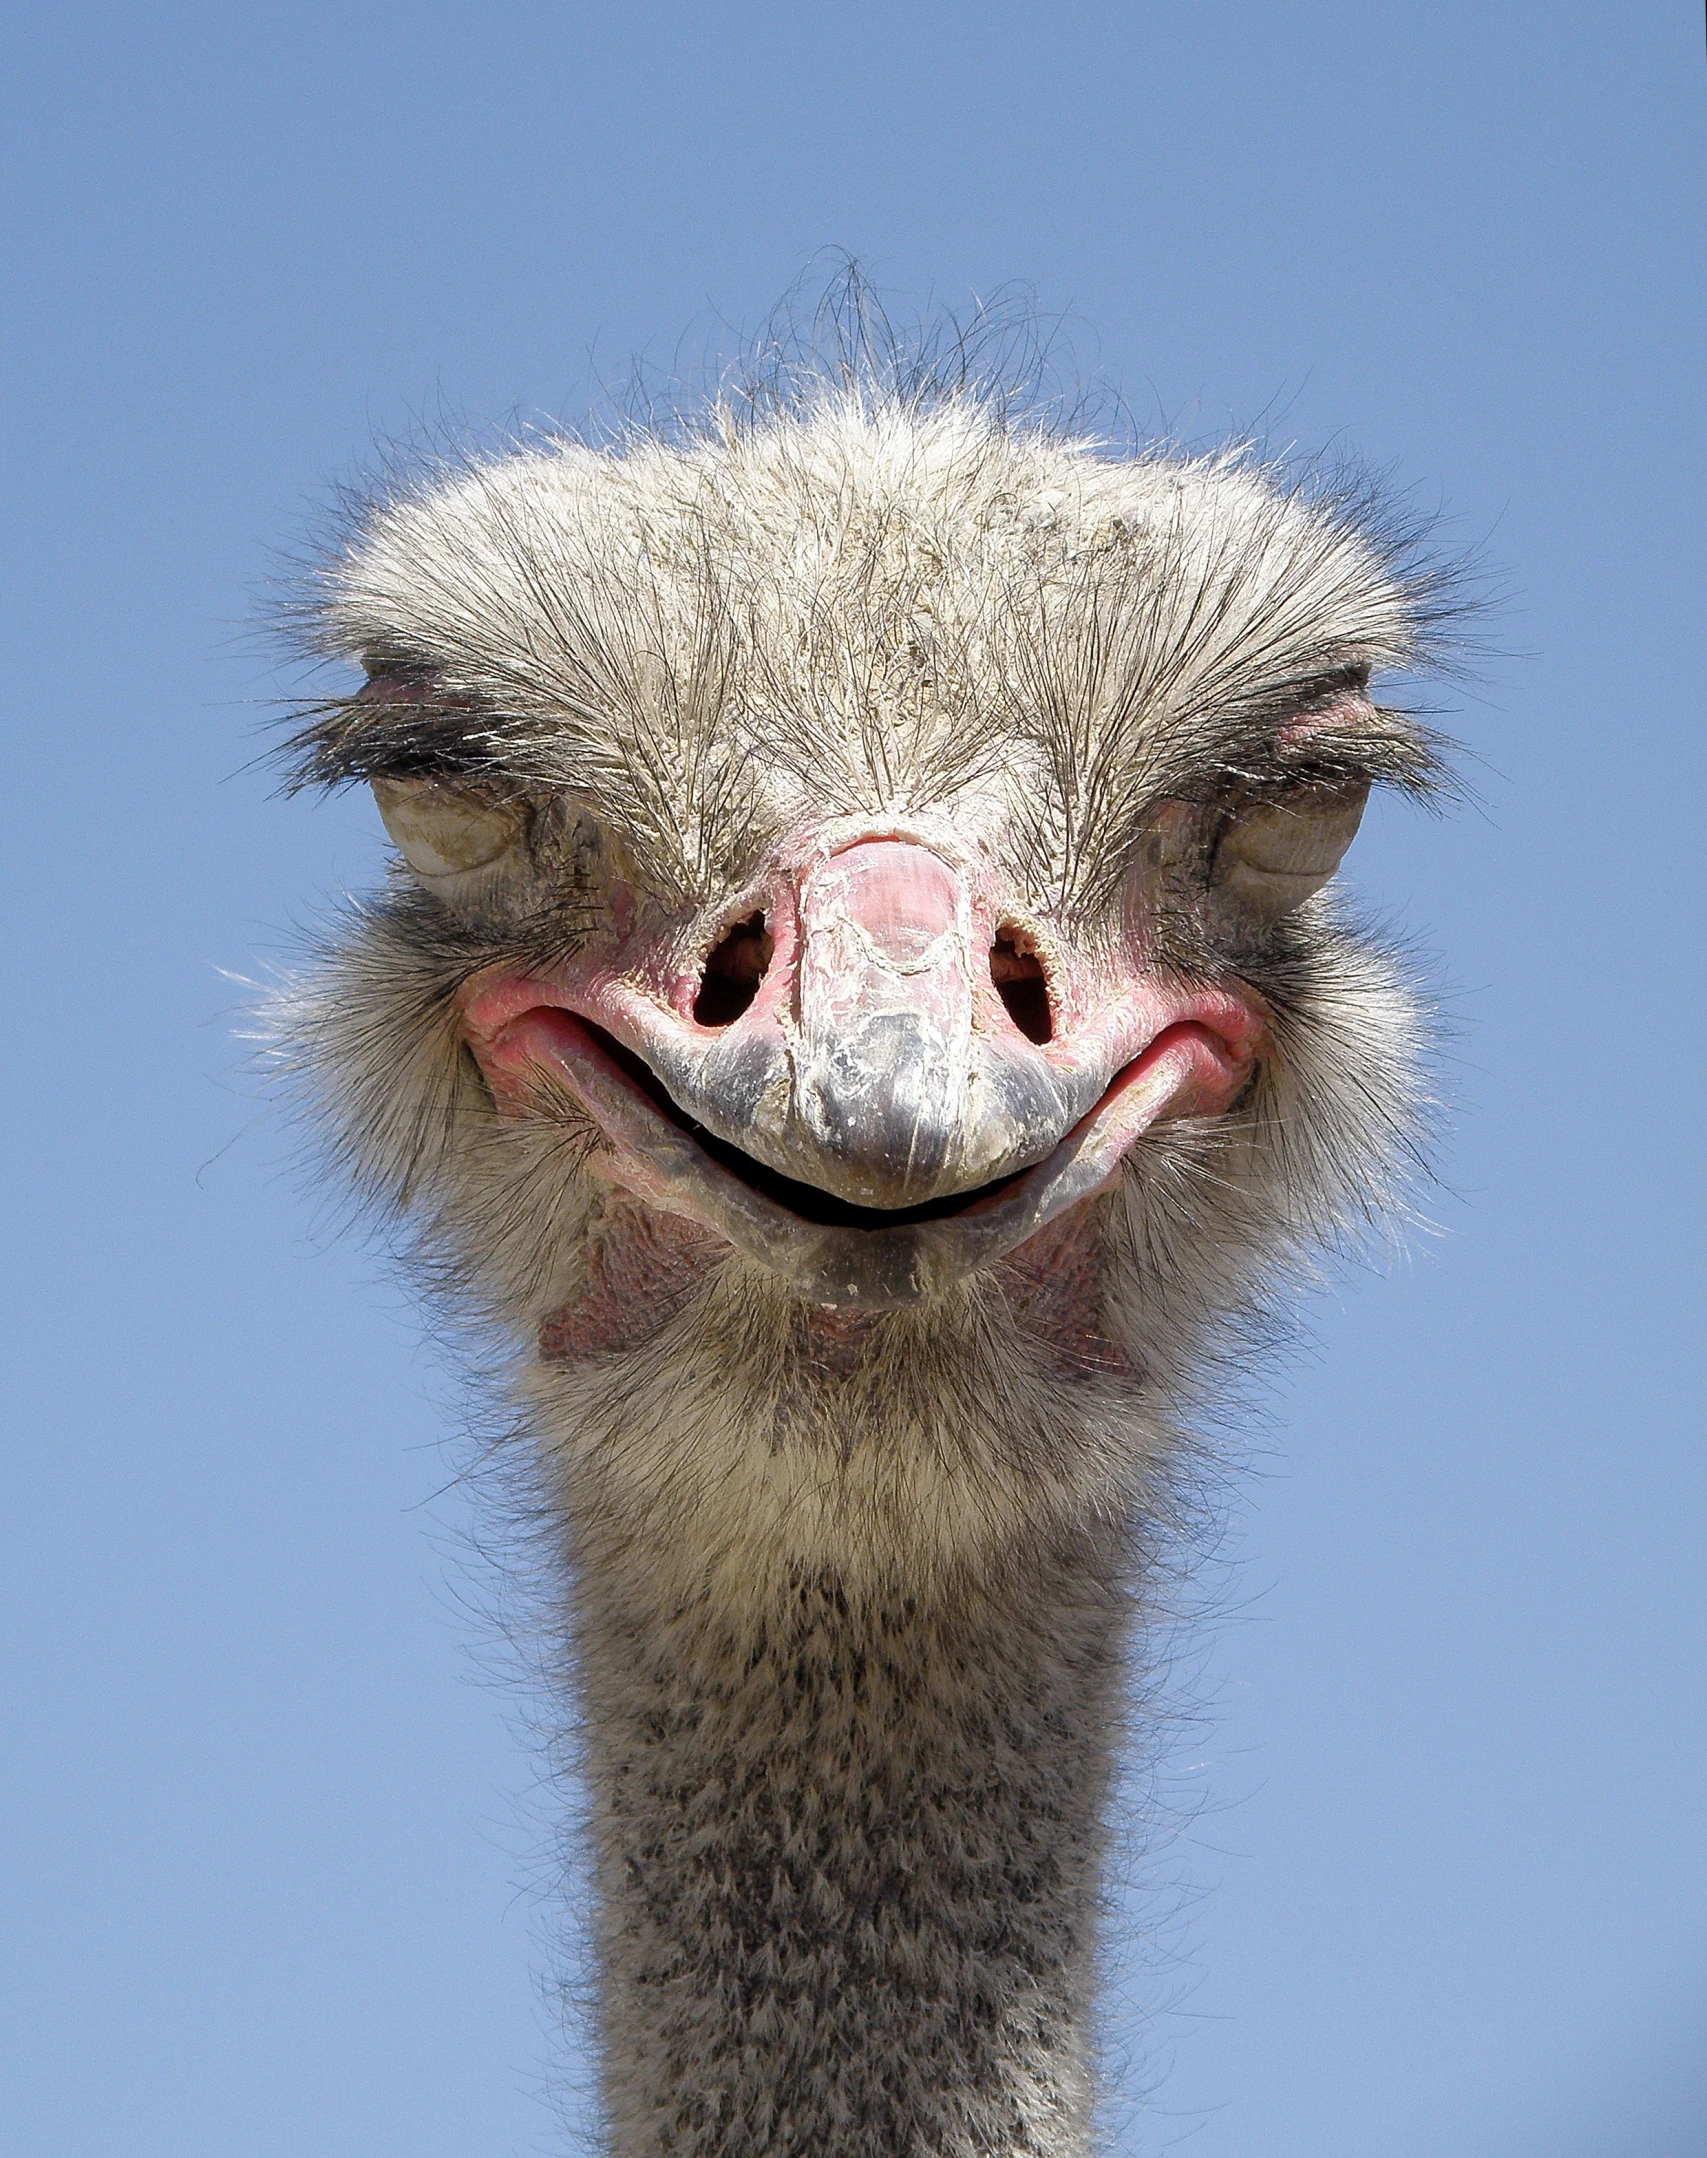 an emu has its beak wide open as it stands in front of a blue sky